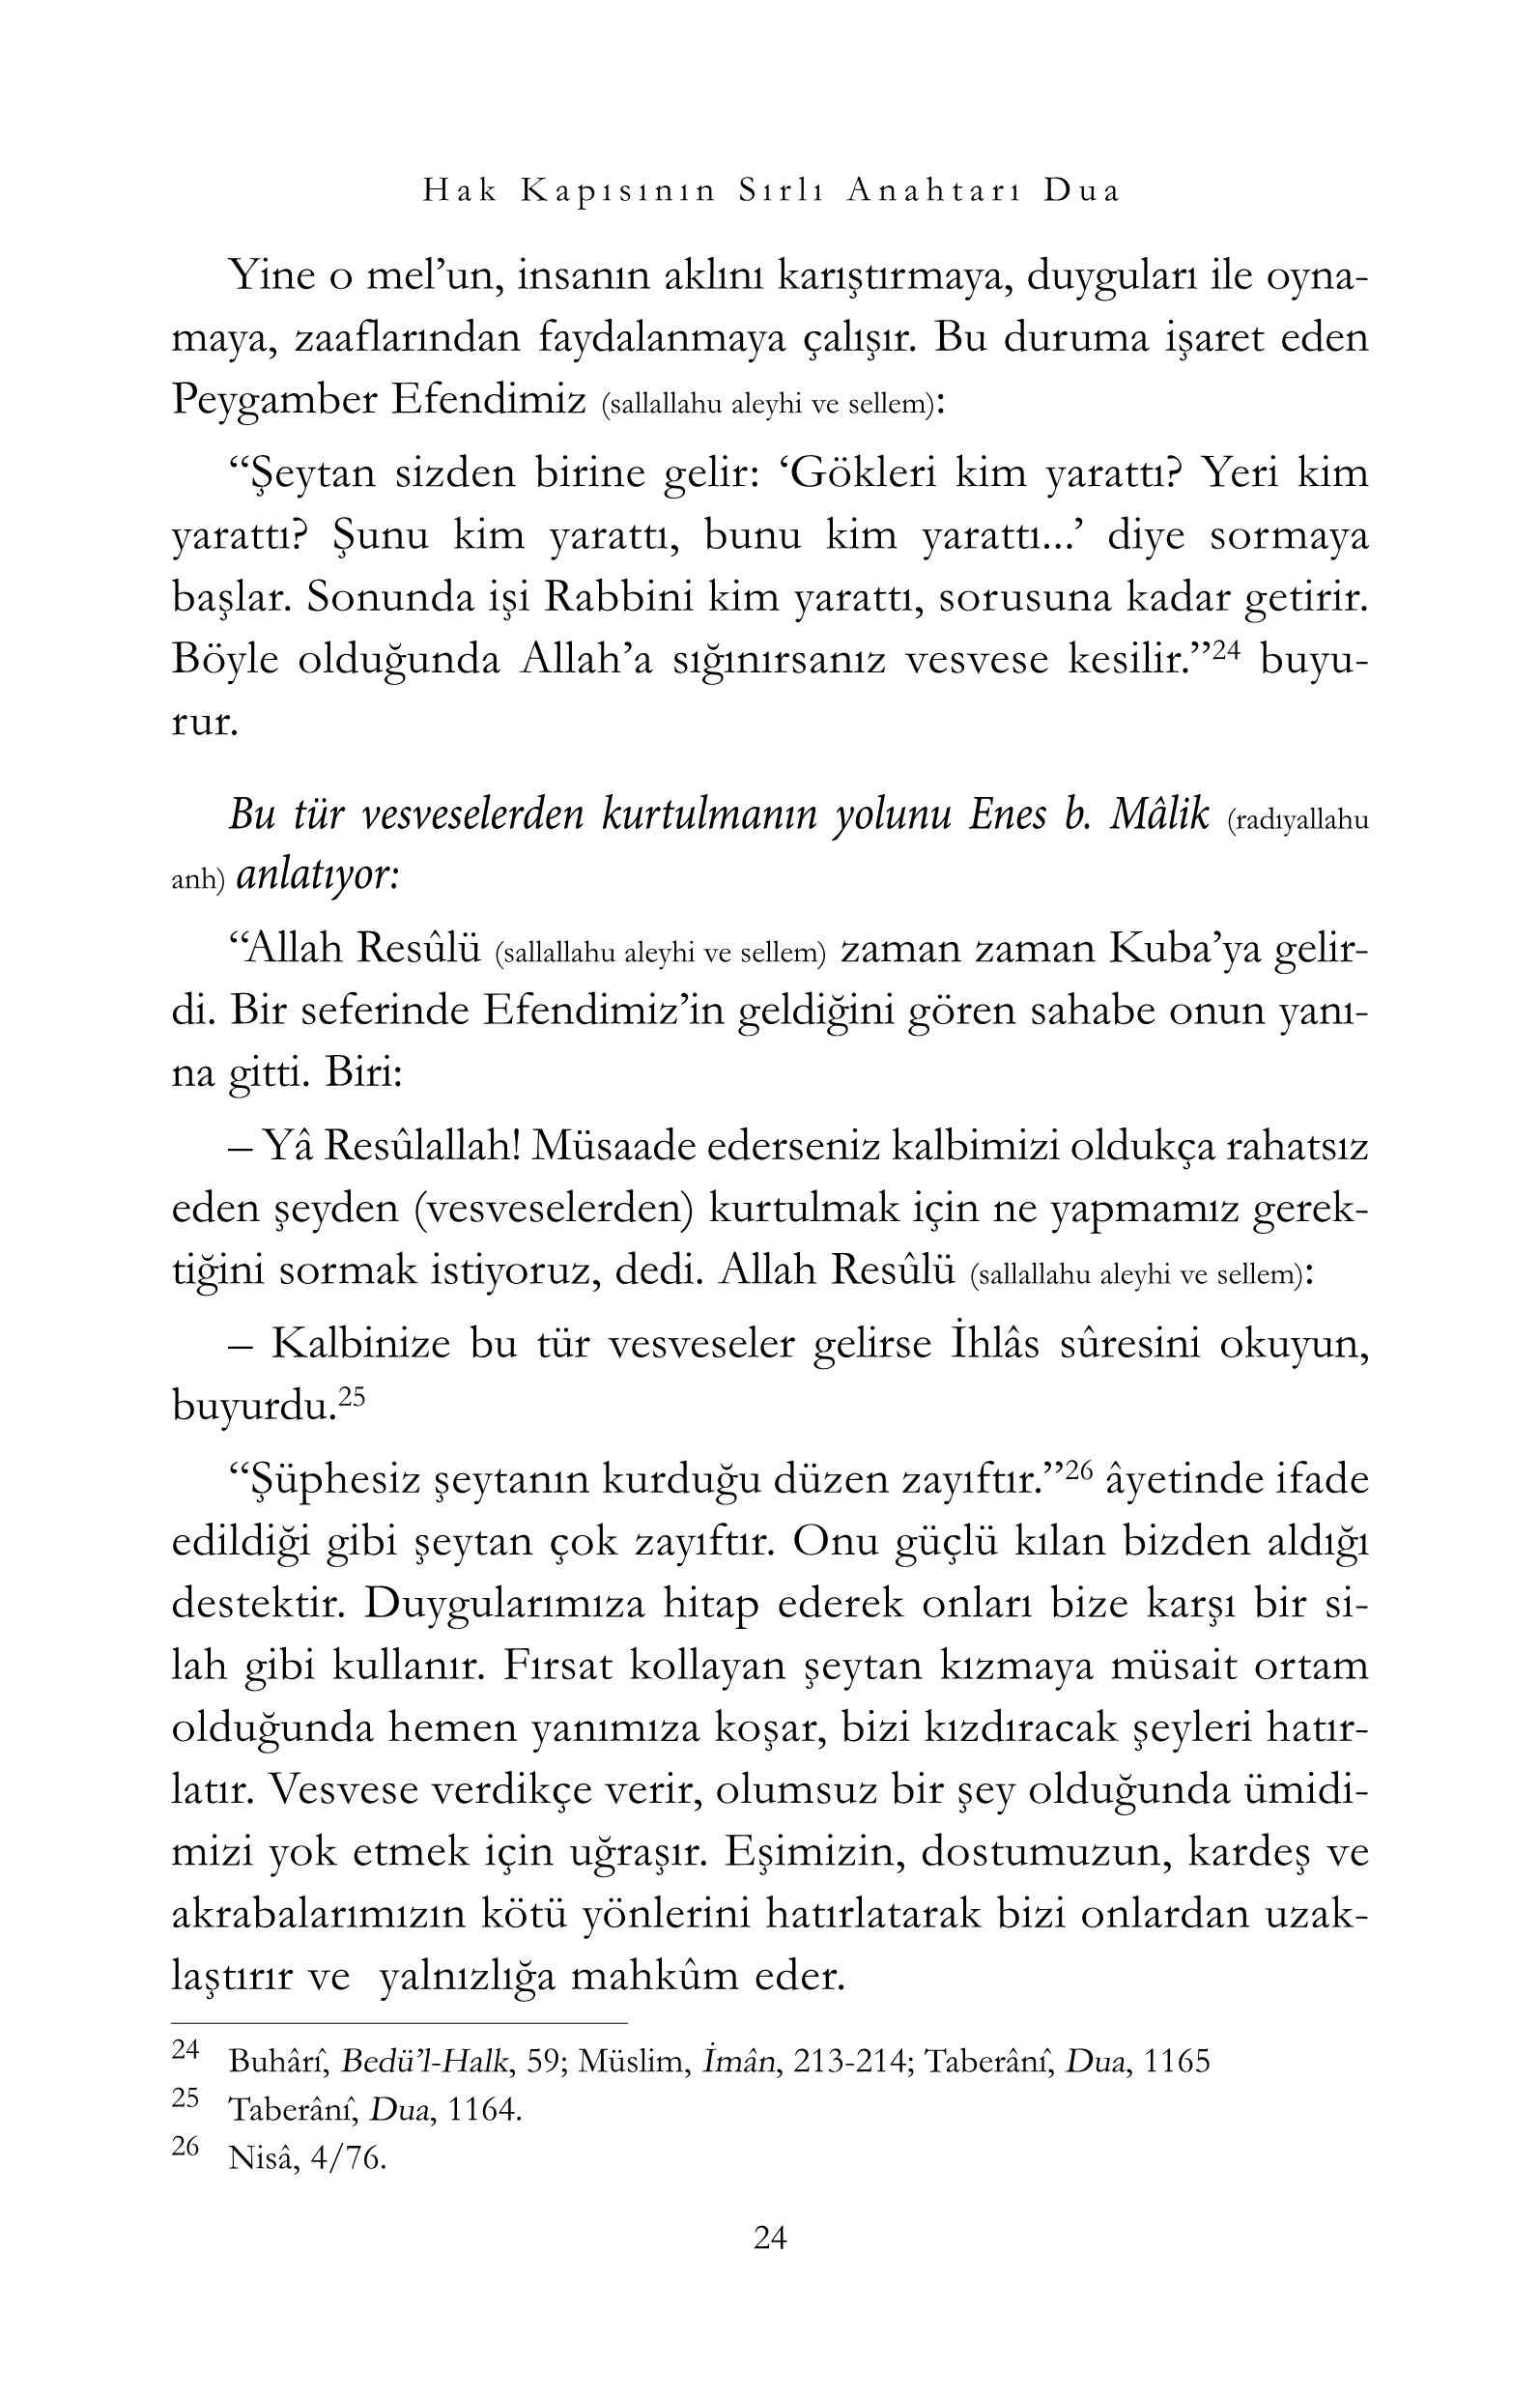 Hilal-Abdullah Kara - Hak Kapisinin Sirli Anahtari Dua - IsikYayinlari.pdf, 257-Sayfa 